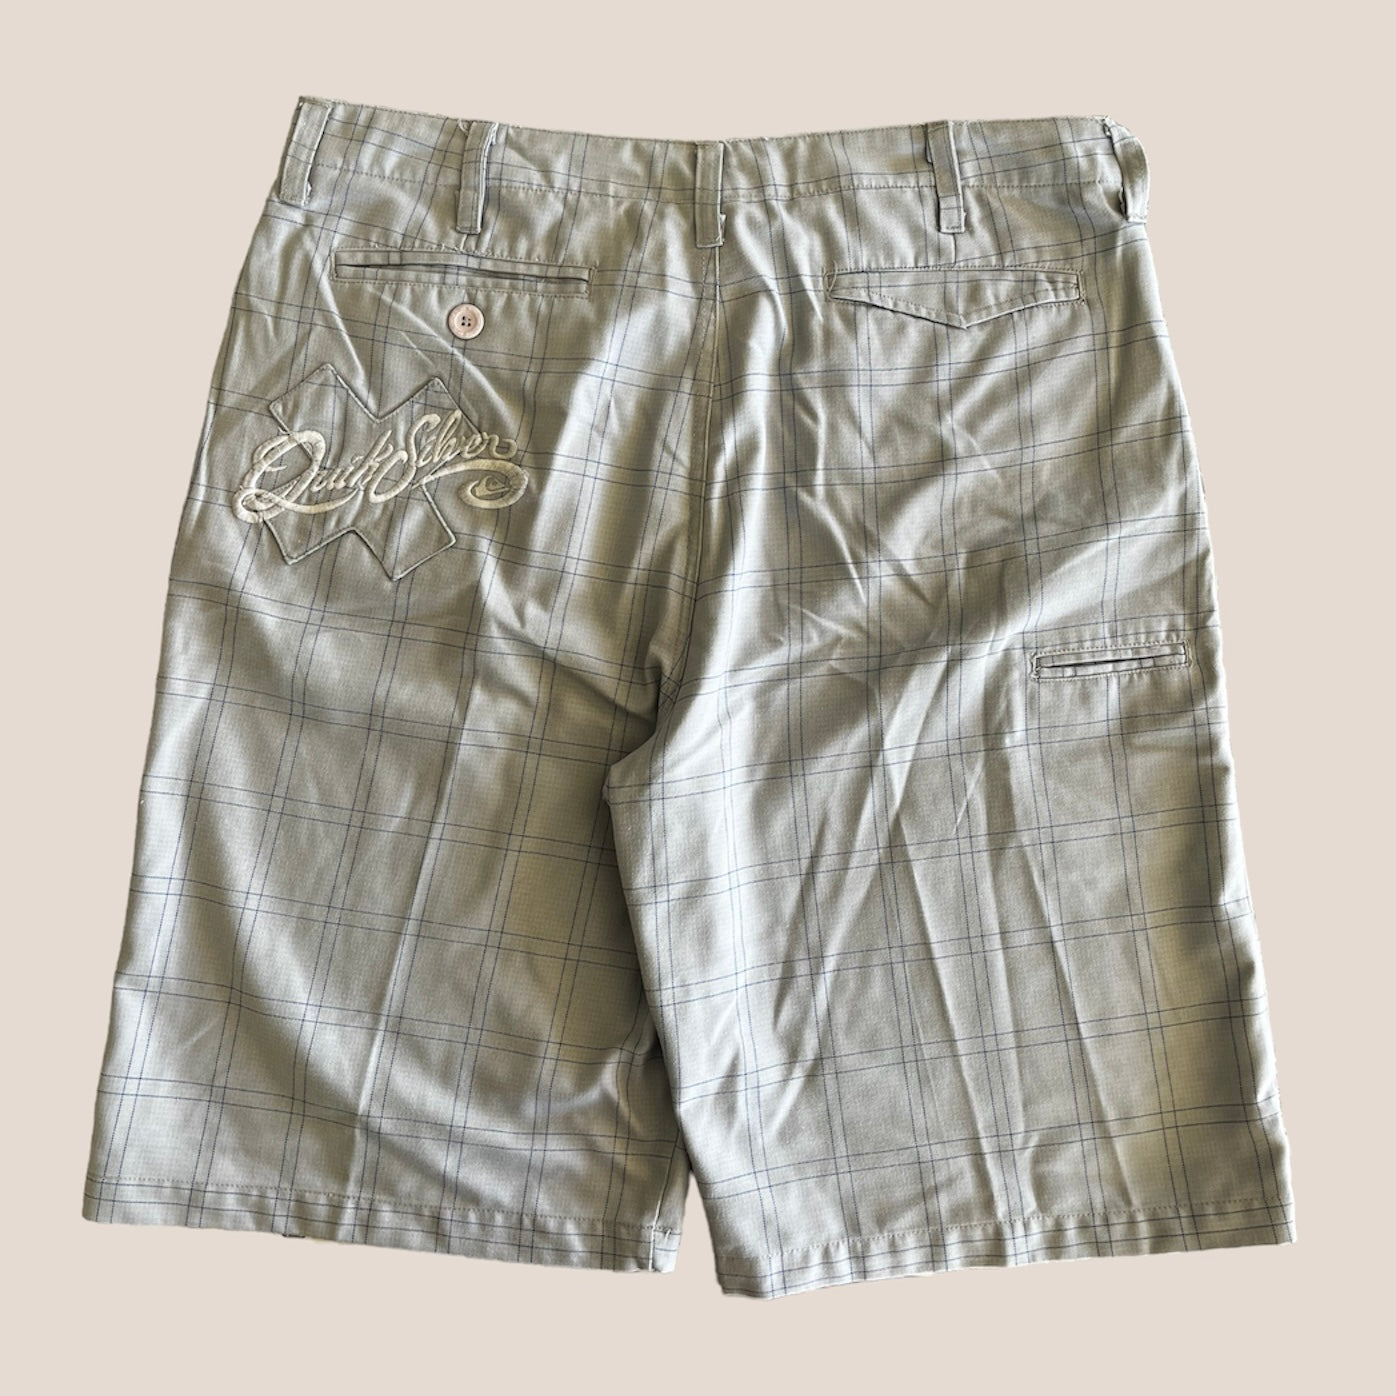 38” Quiksilver shorts